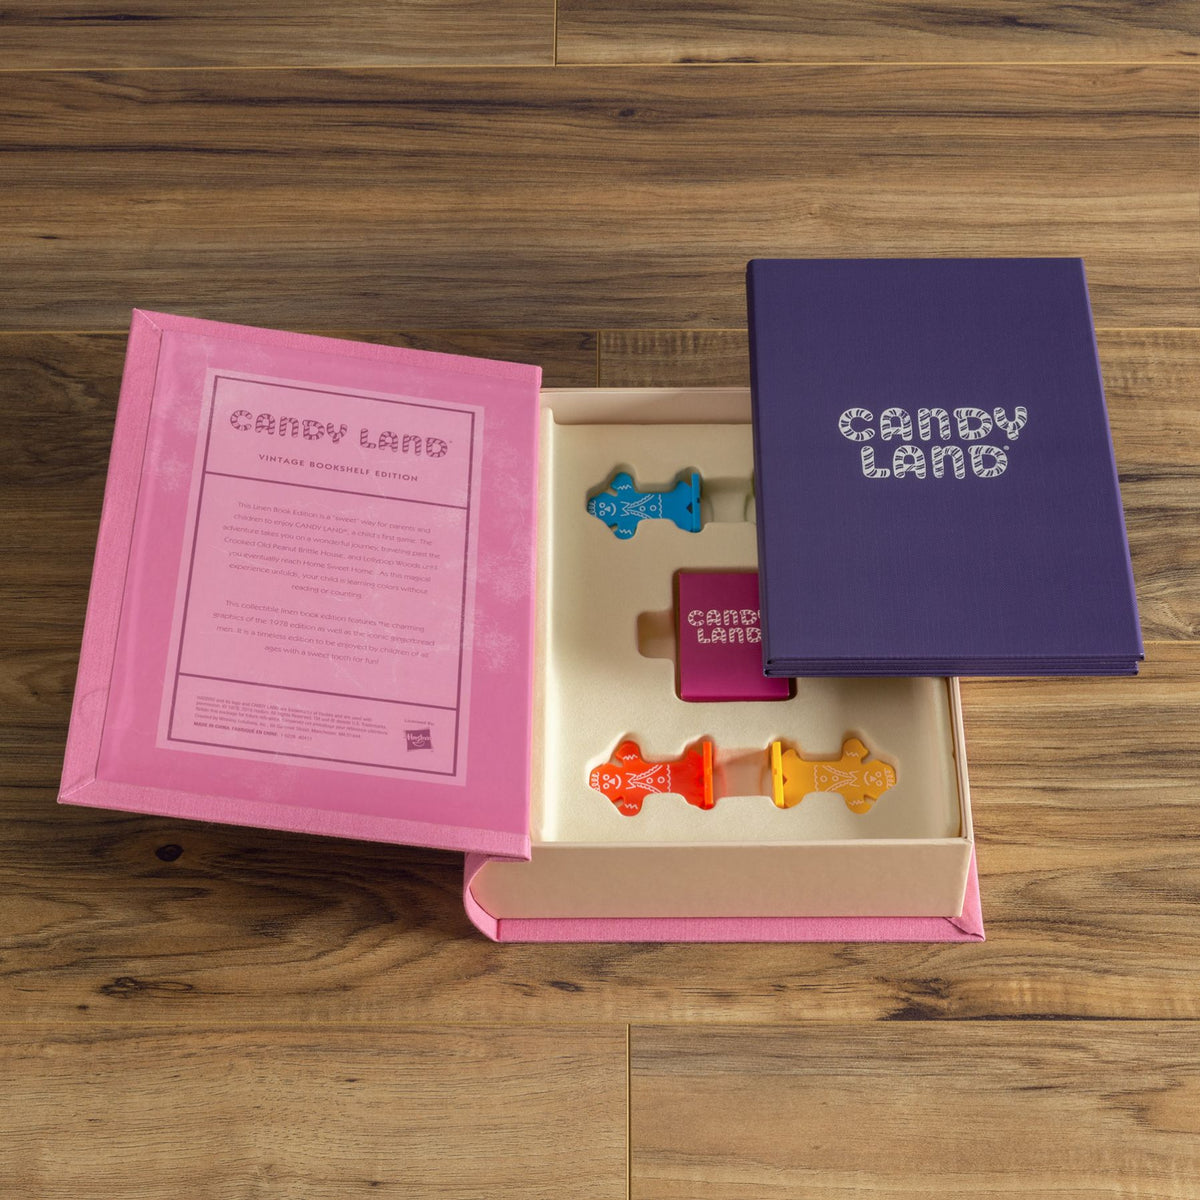 Vintage Bookshelf Edition | Candyland | WS Game Company